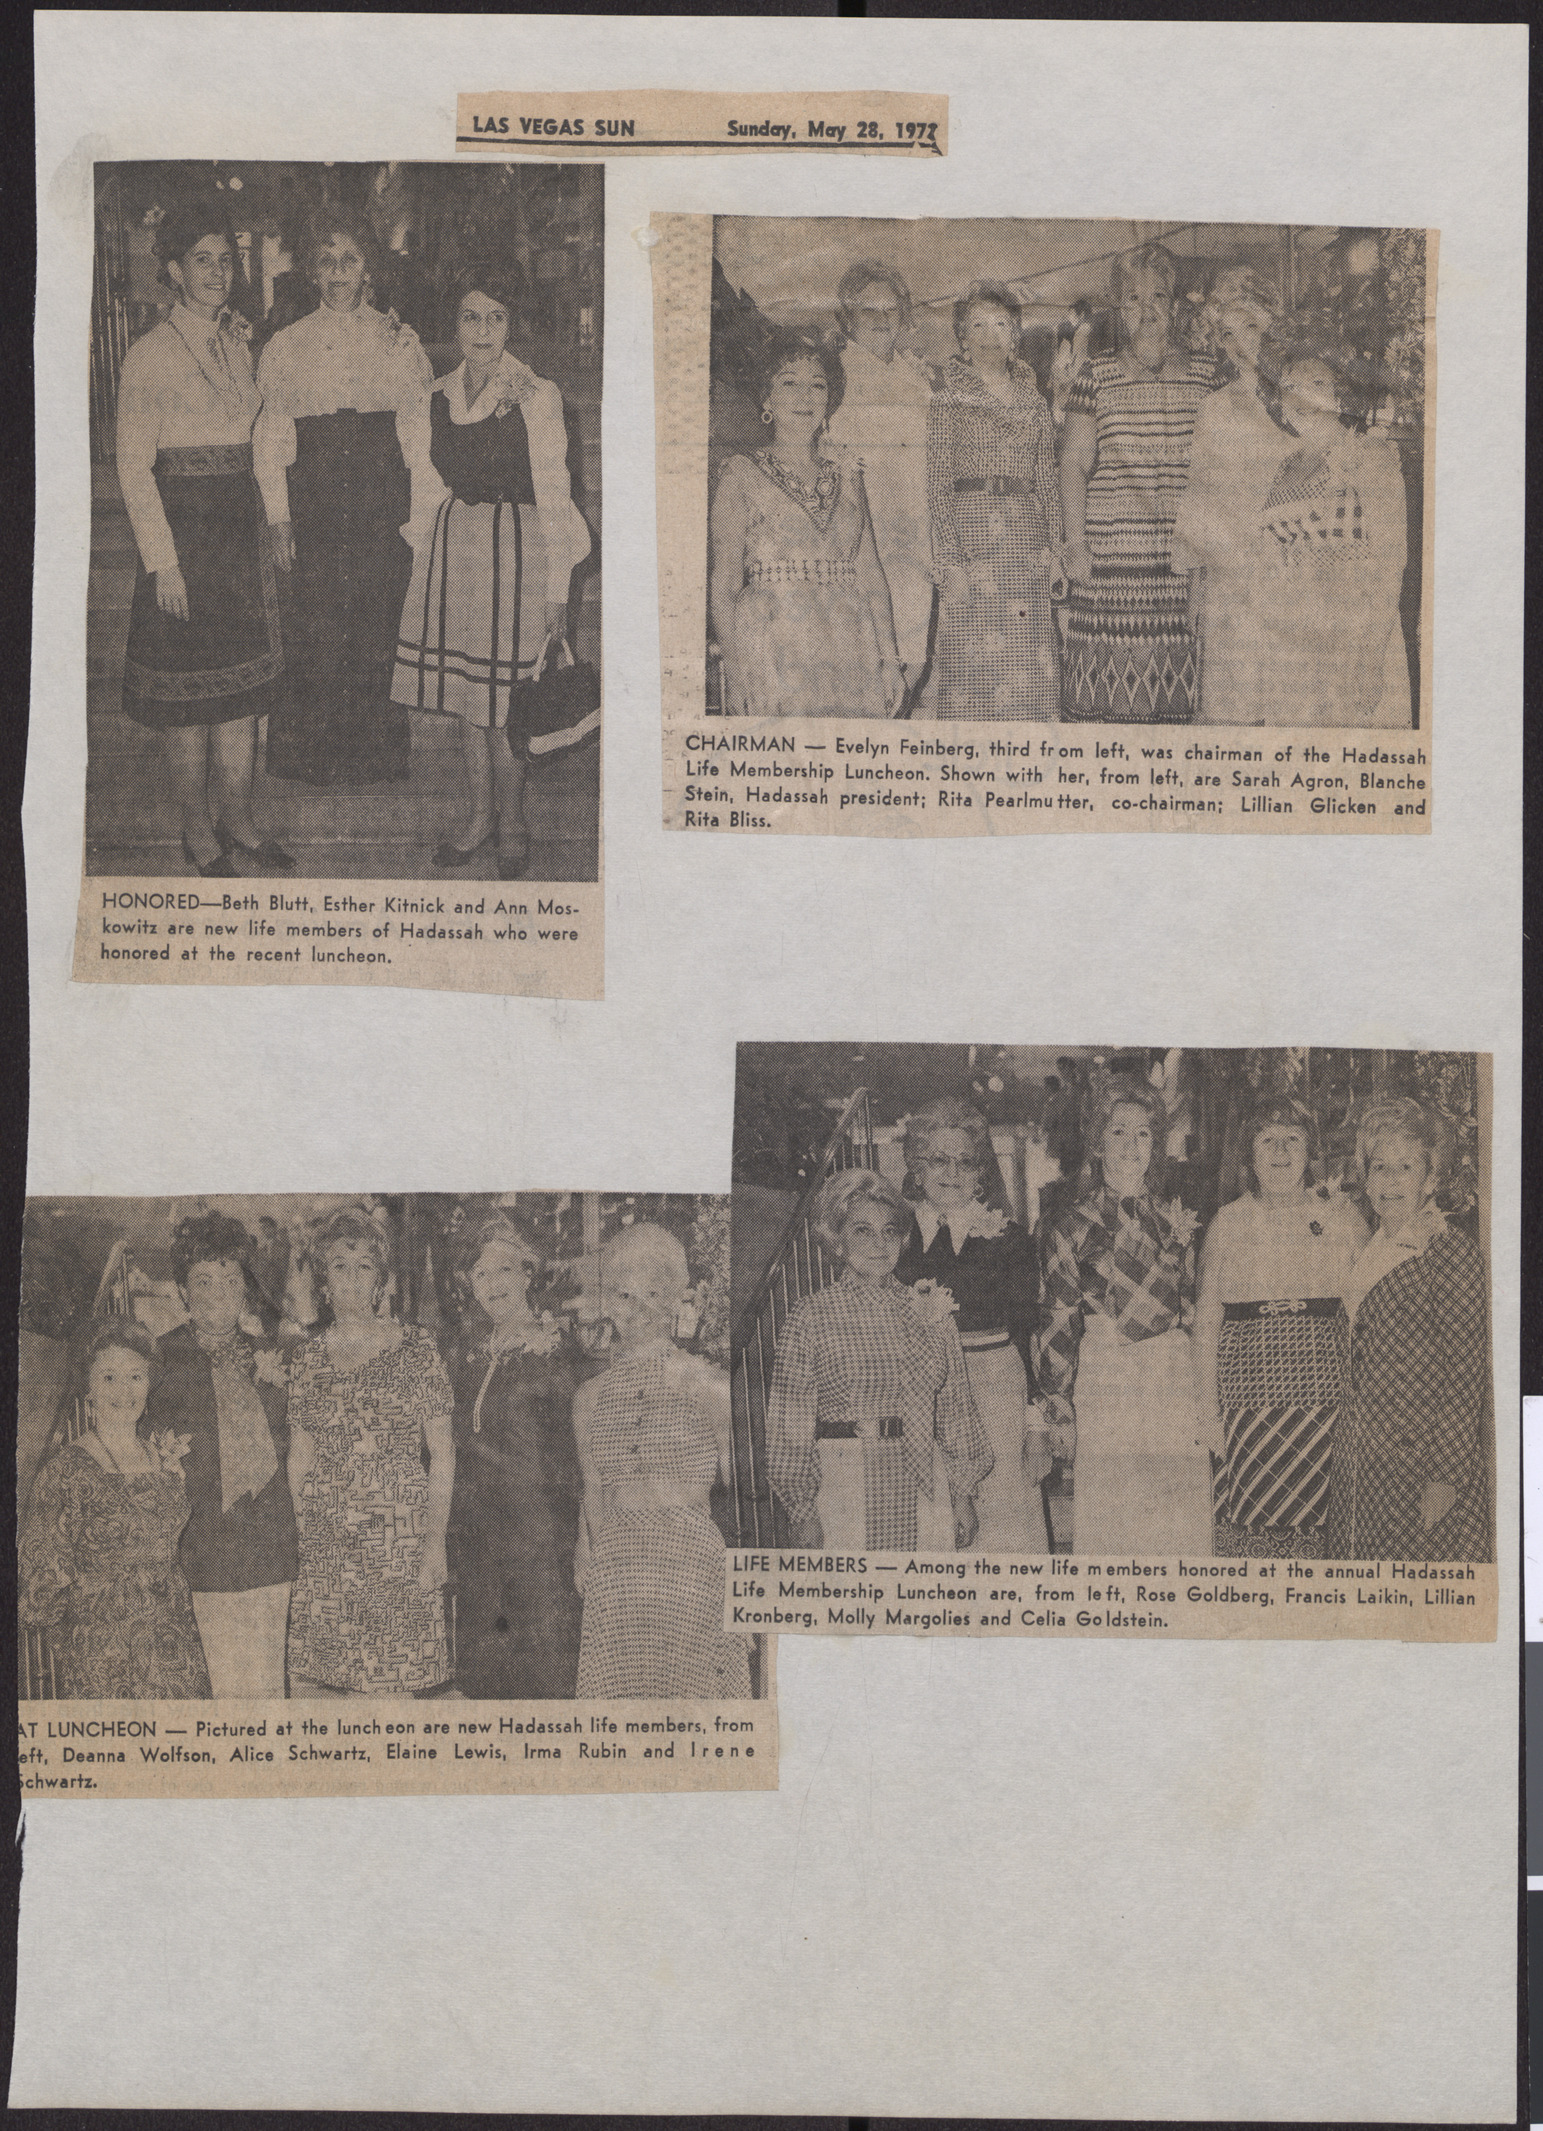 Newspaper clippings of images of Hadassah members, Las Vegas Sun, May 28, 1972